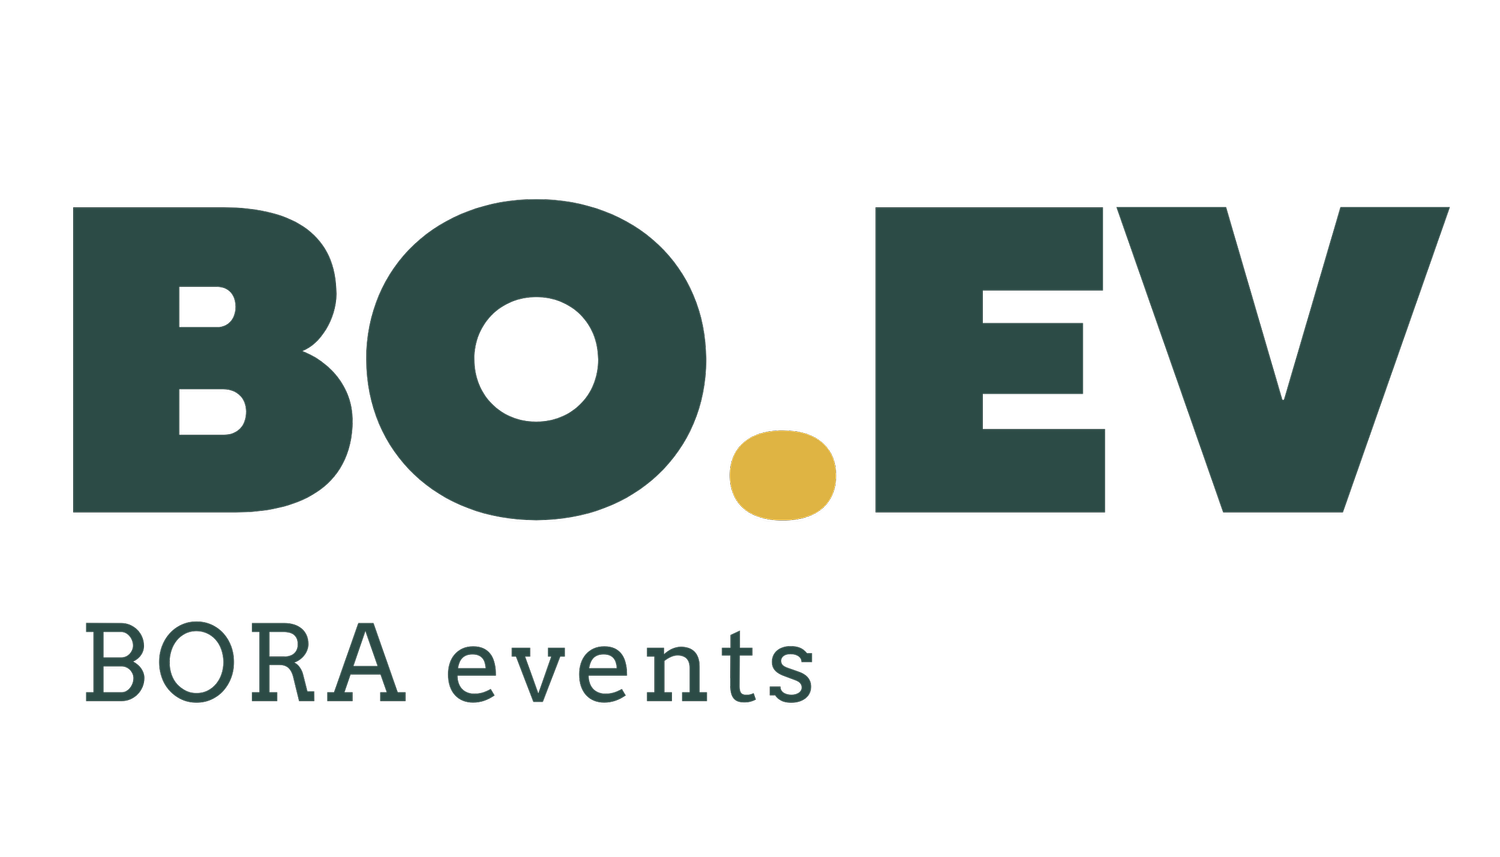 BORA events